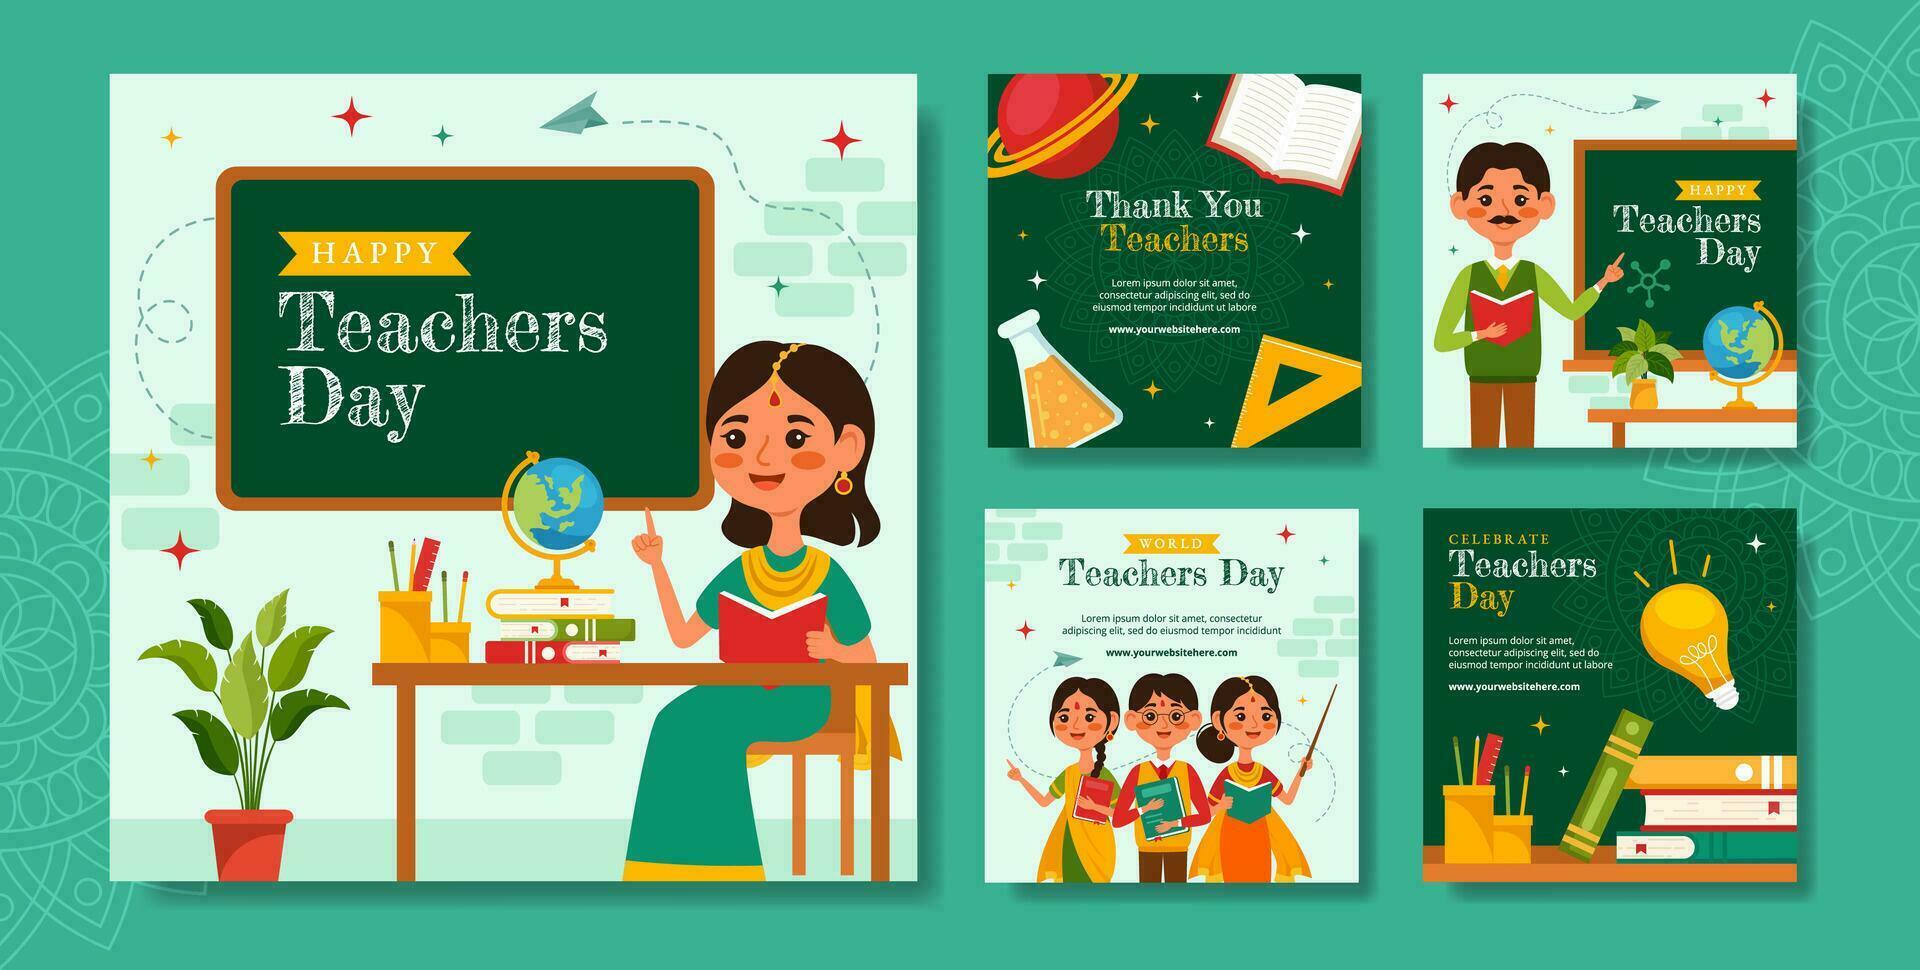 Teacher Day in India Social Media Post Flat Cartoon Hand Drawn Templates Background Illustration vector